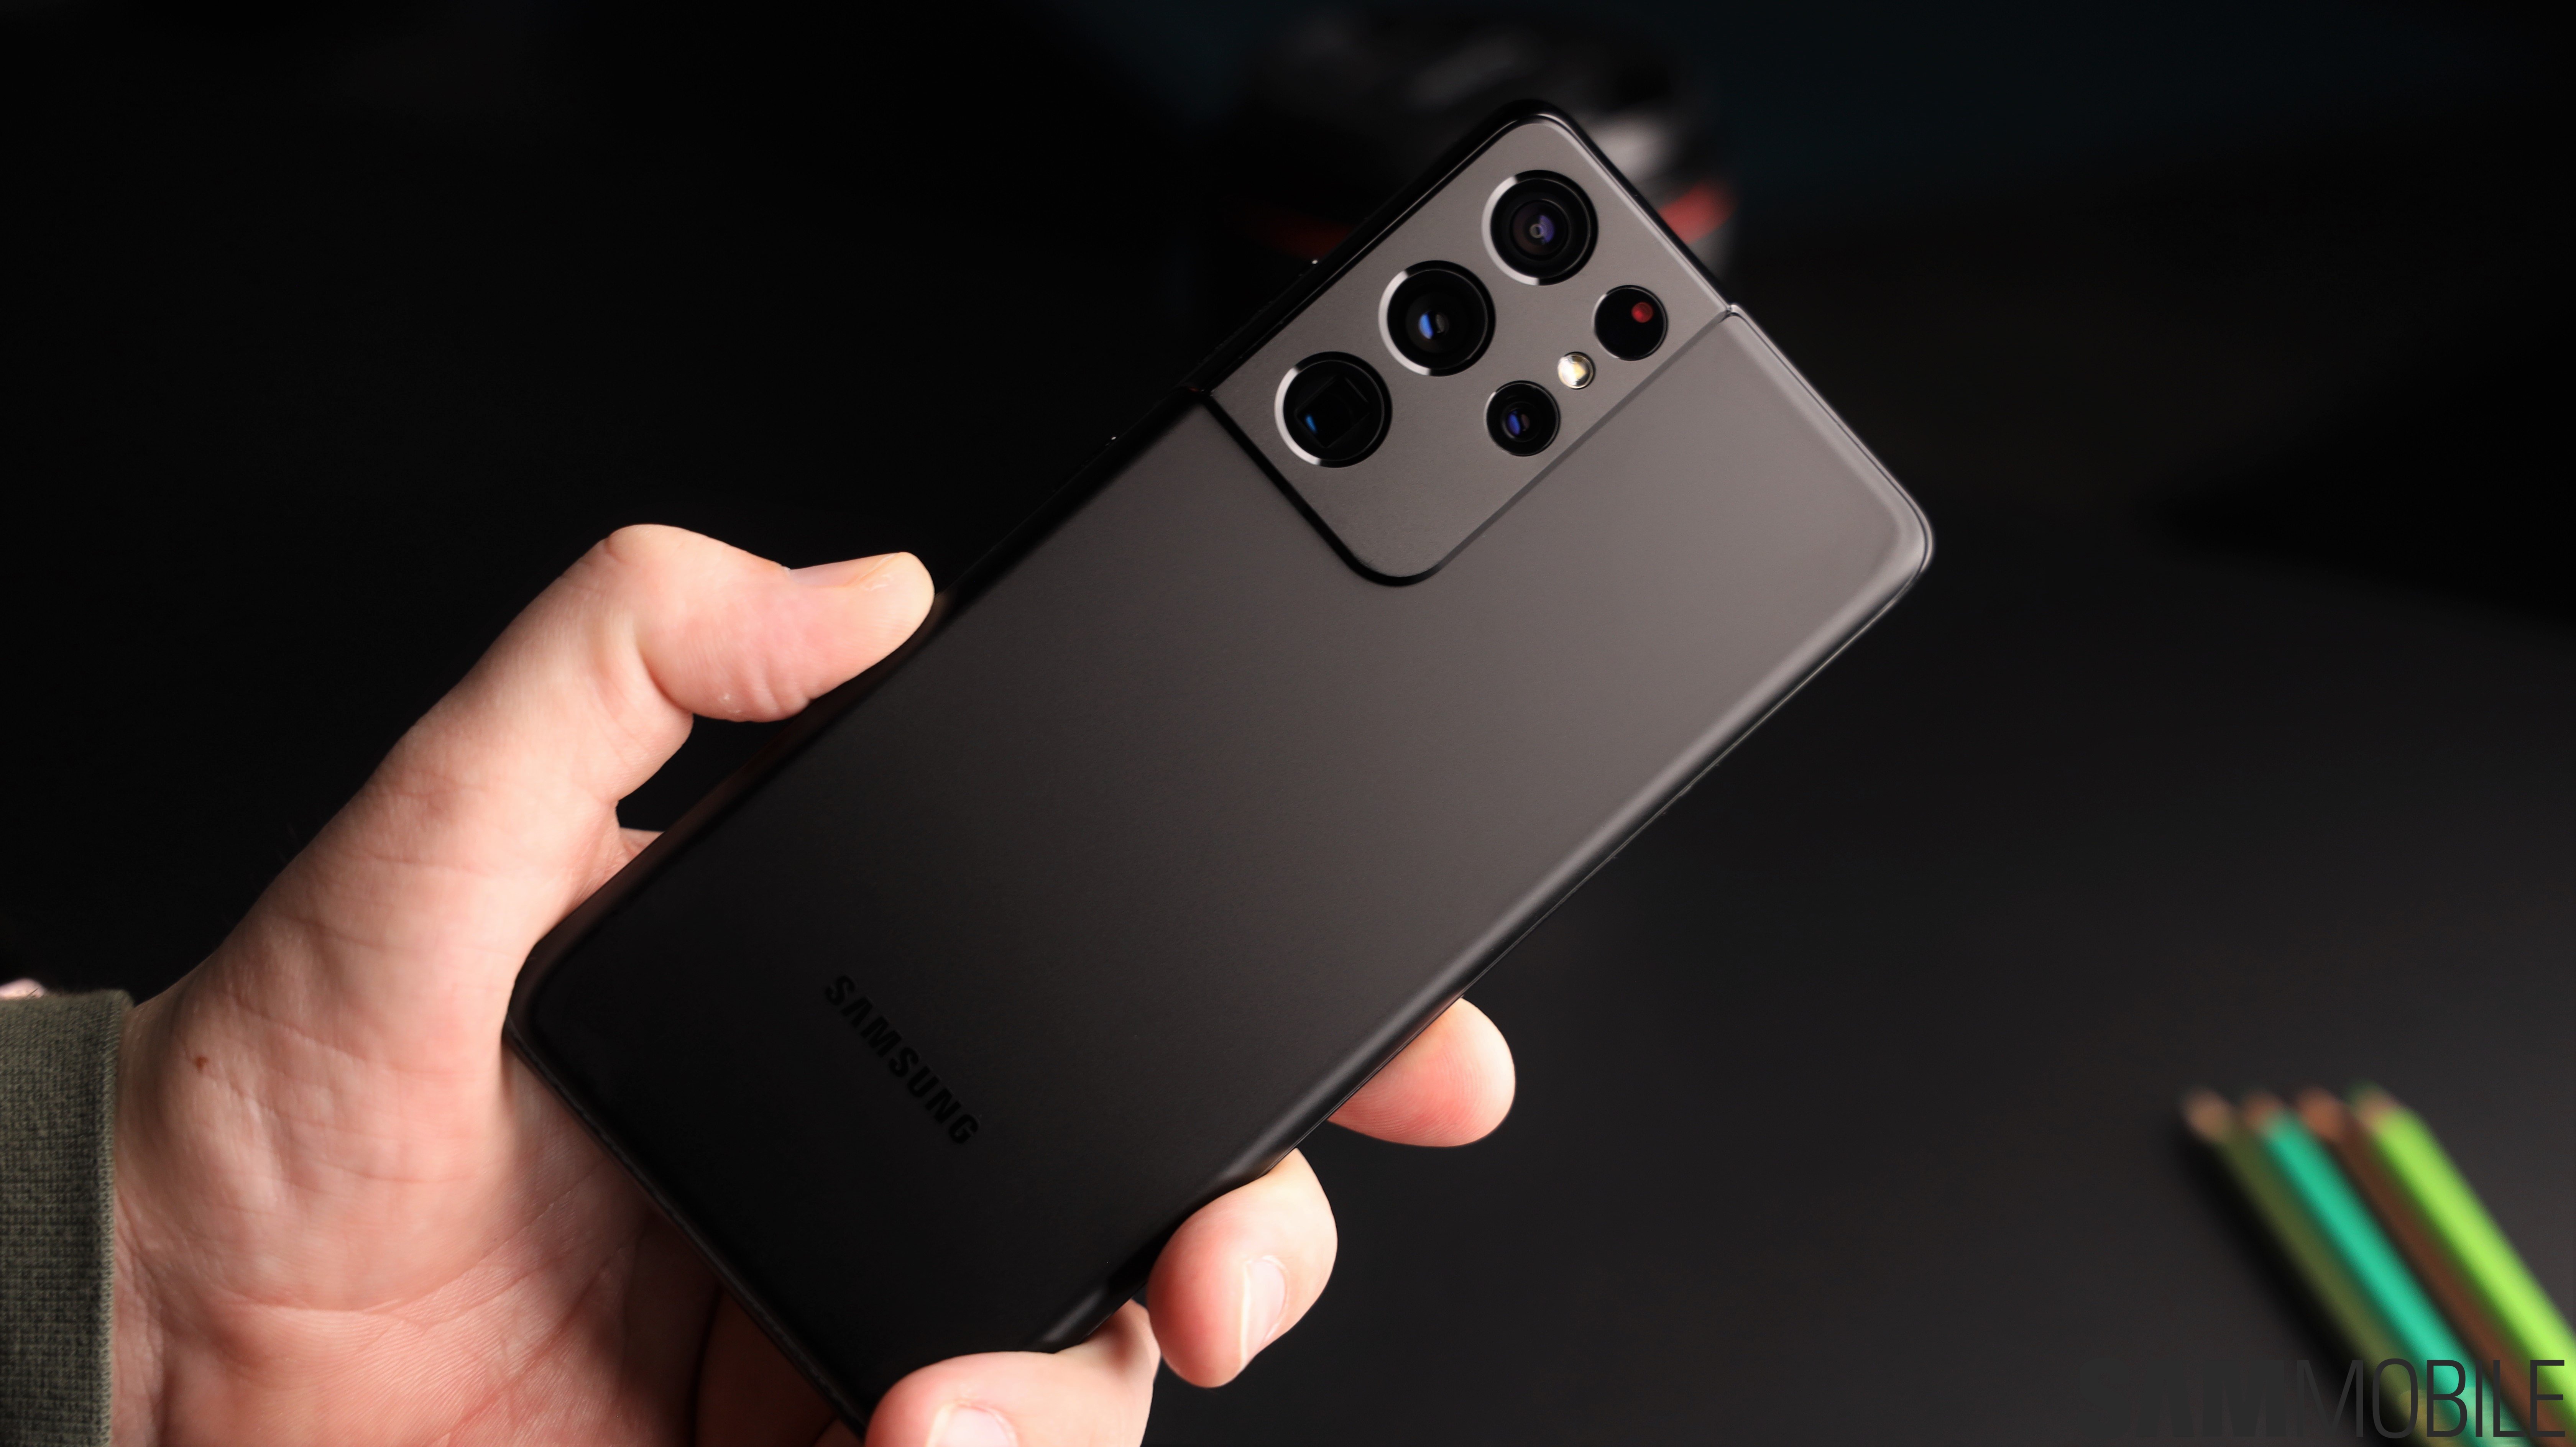 Samsung Galaxy S21 Ultra 5G Review: 2021's Best Galaxy Phone